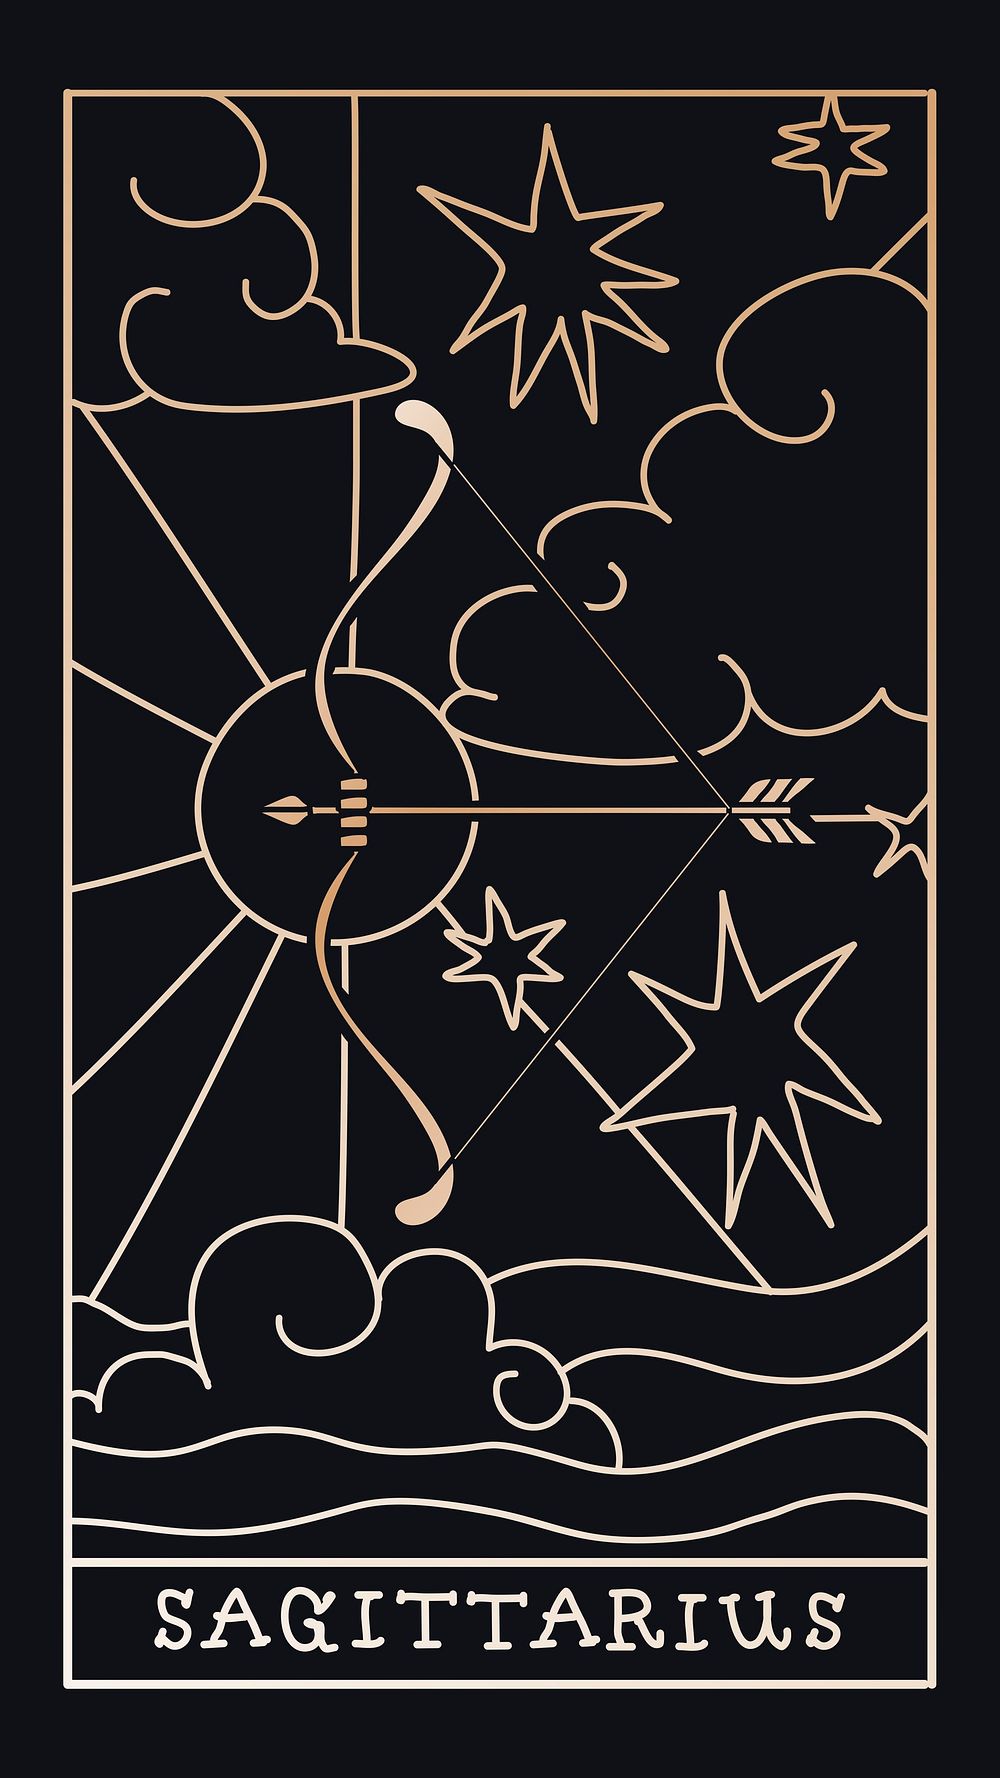 Sagittarius iPhone wallpaper, black and | Free PSD Illustration - rawpixel